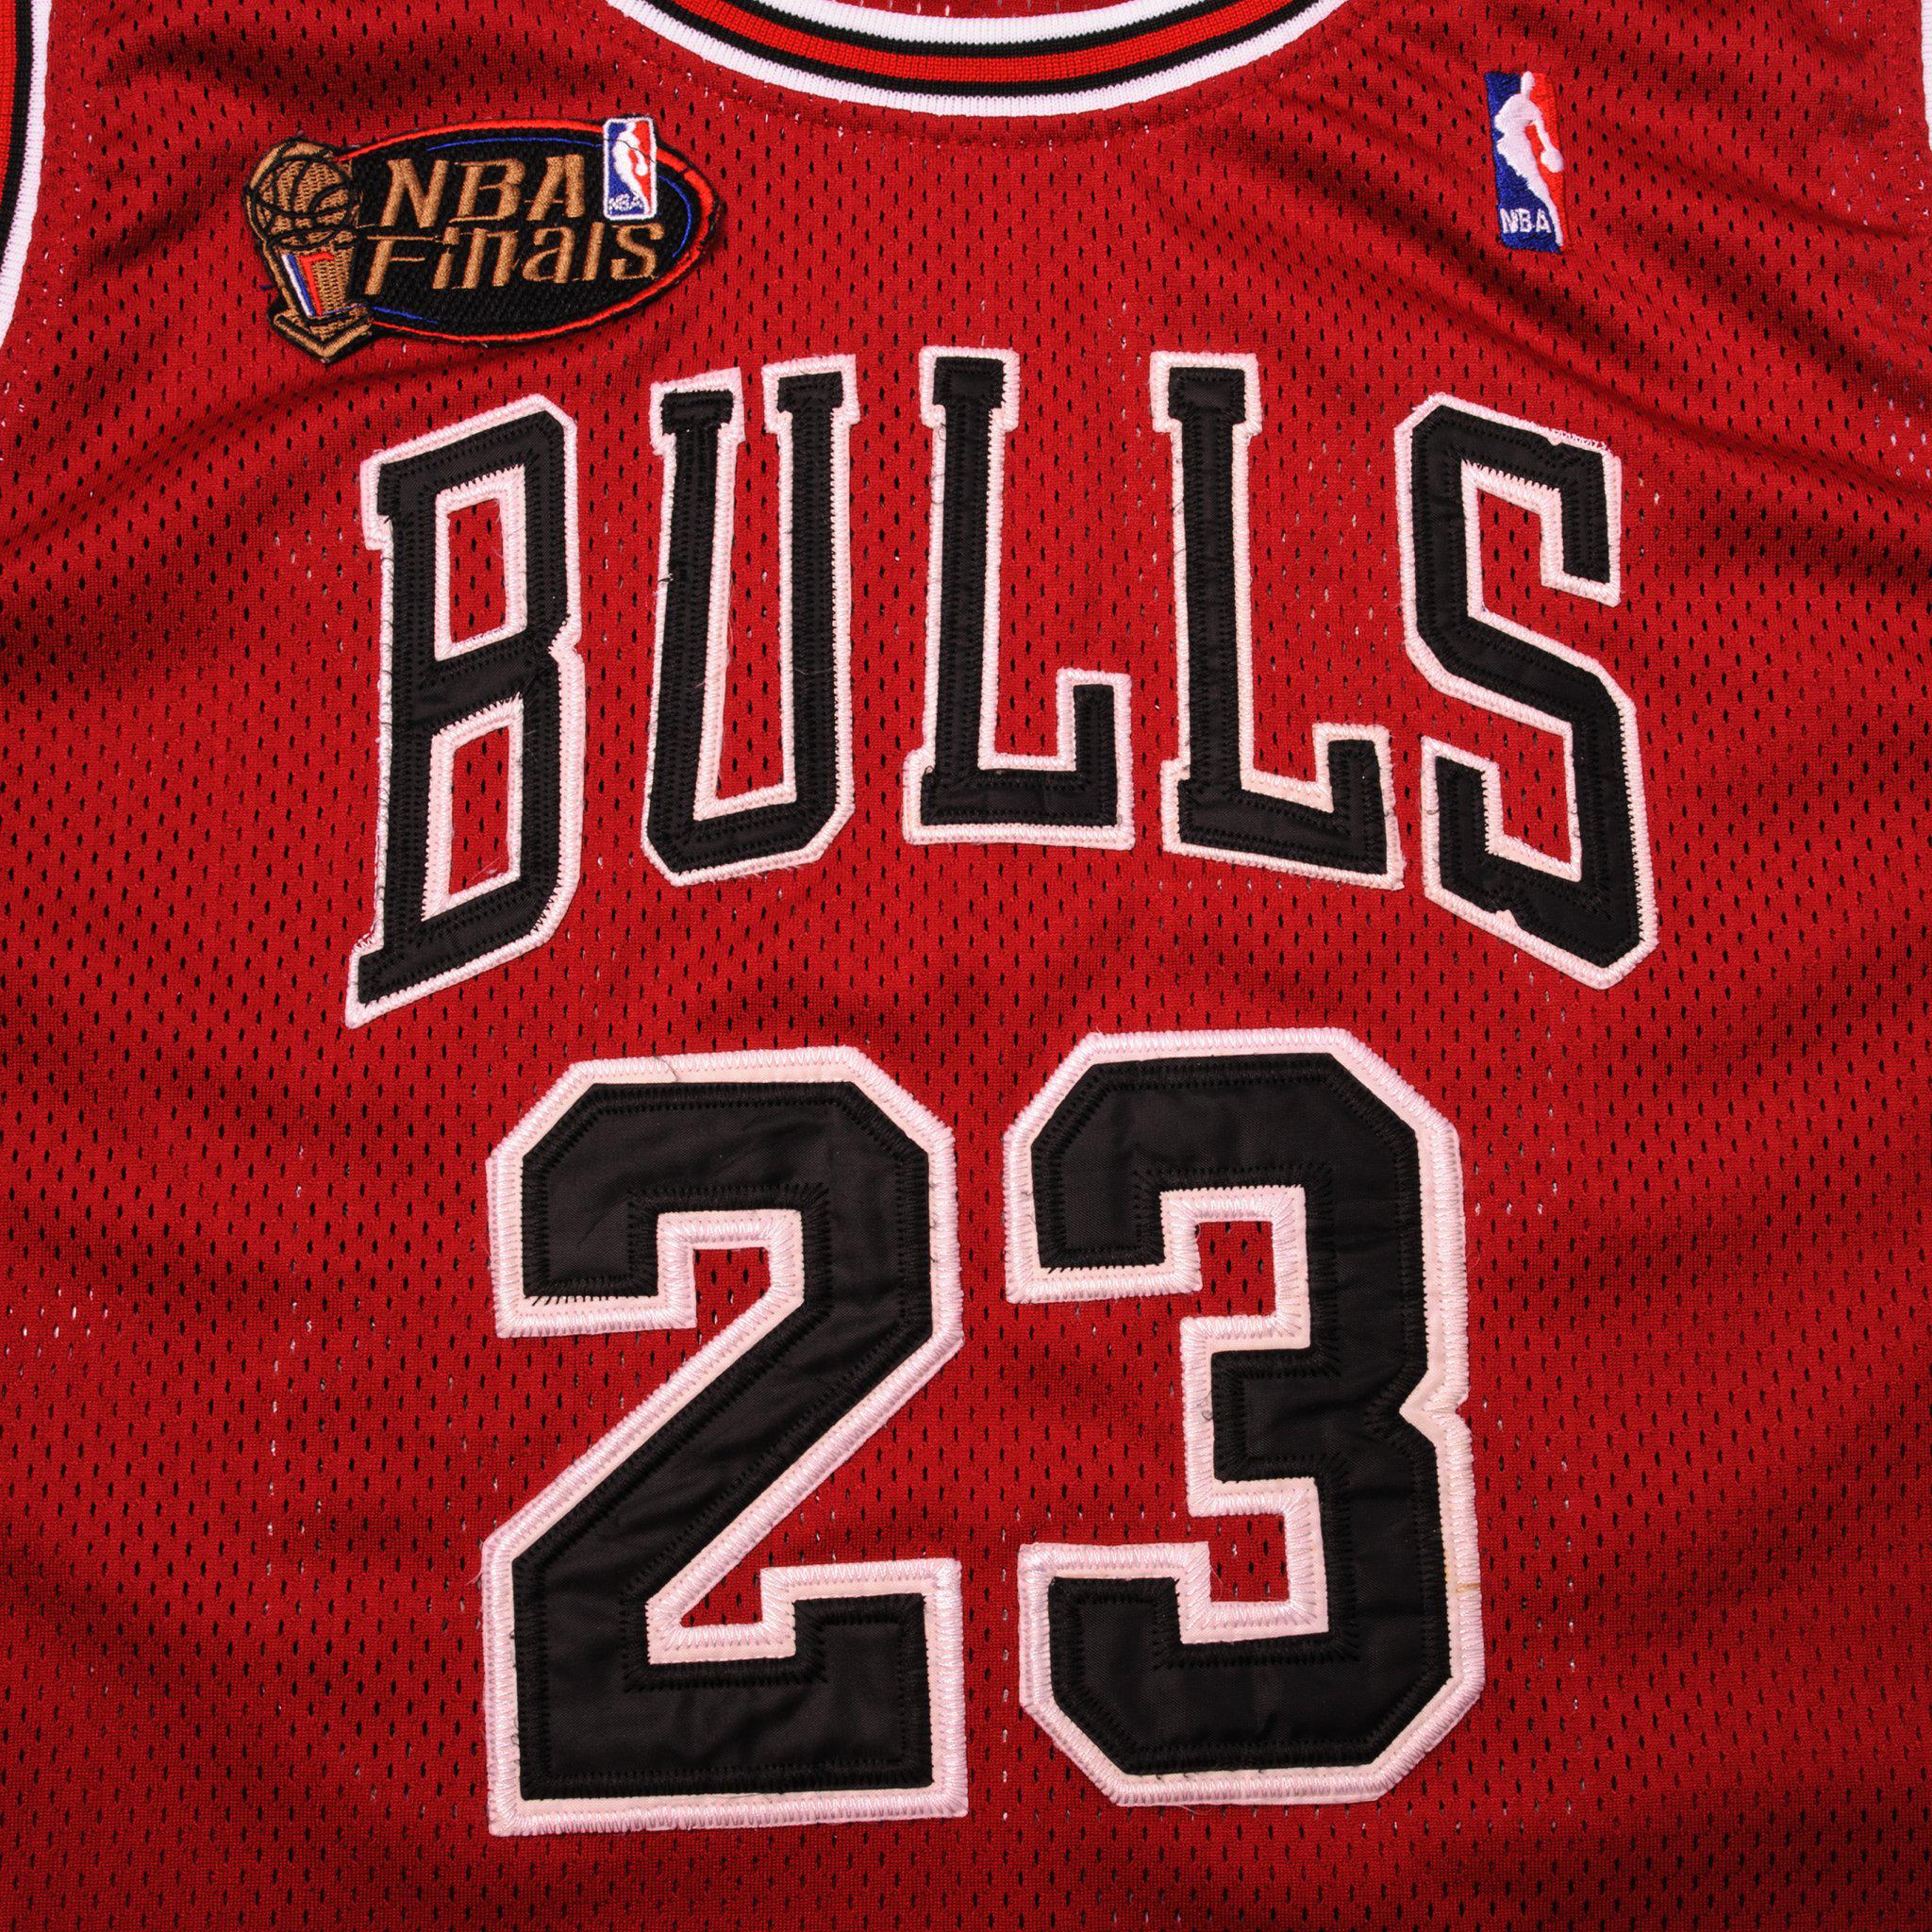 Nike #23 Jordan Chicago Bulls Nike NBA jersey